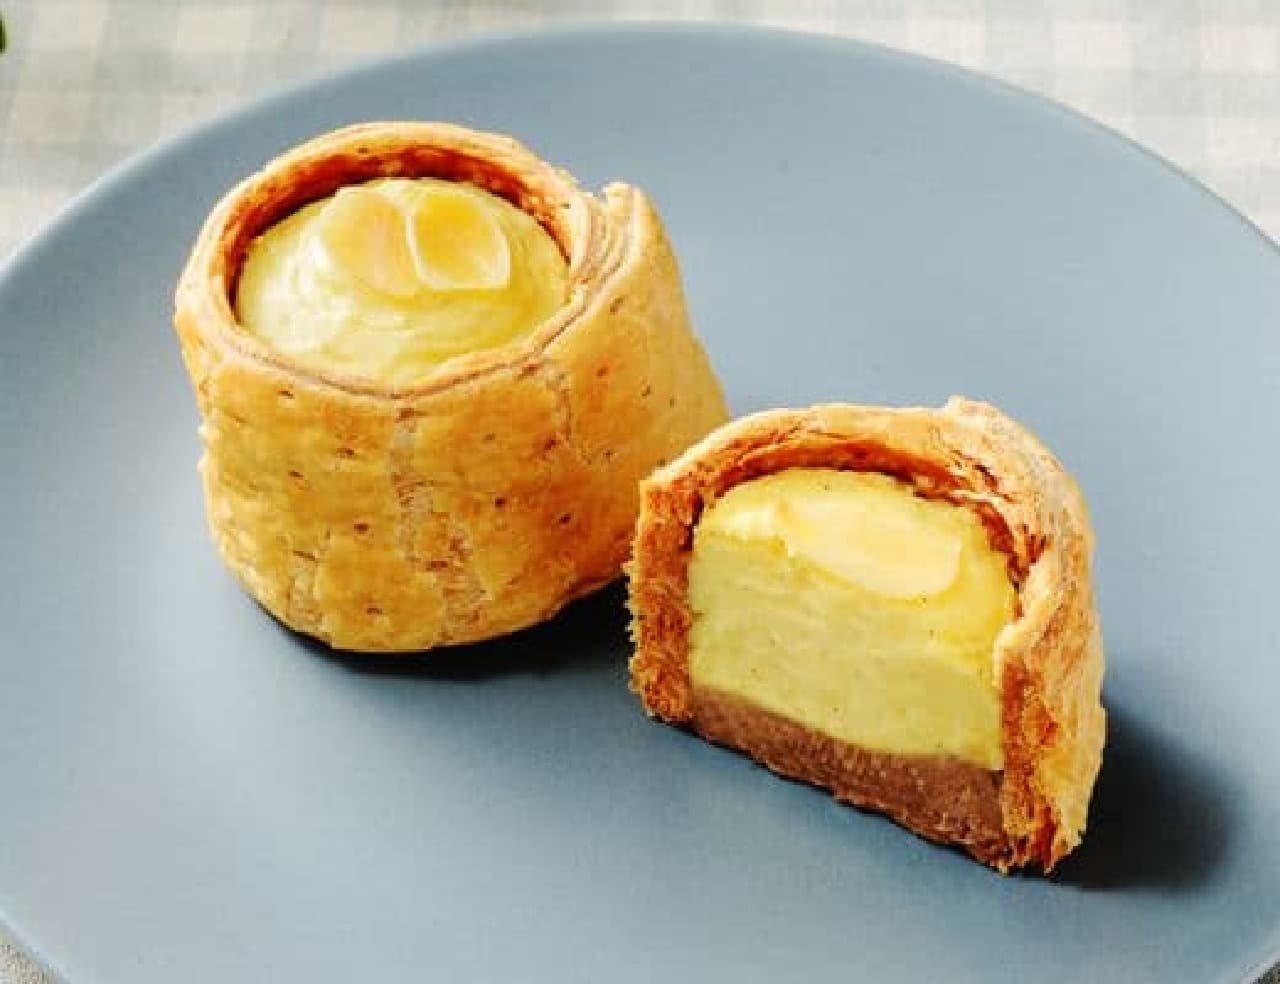 Lawson "Pie with Filling Custard Cream